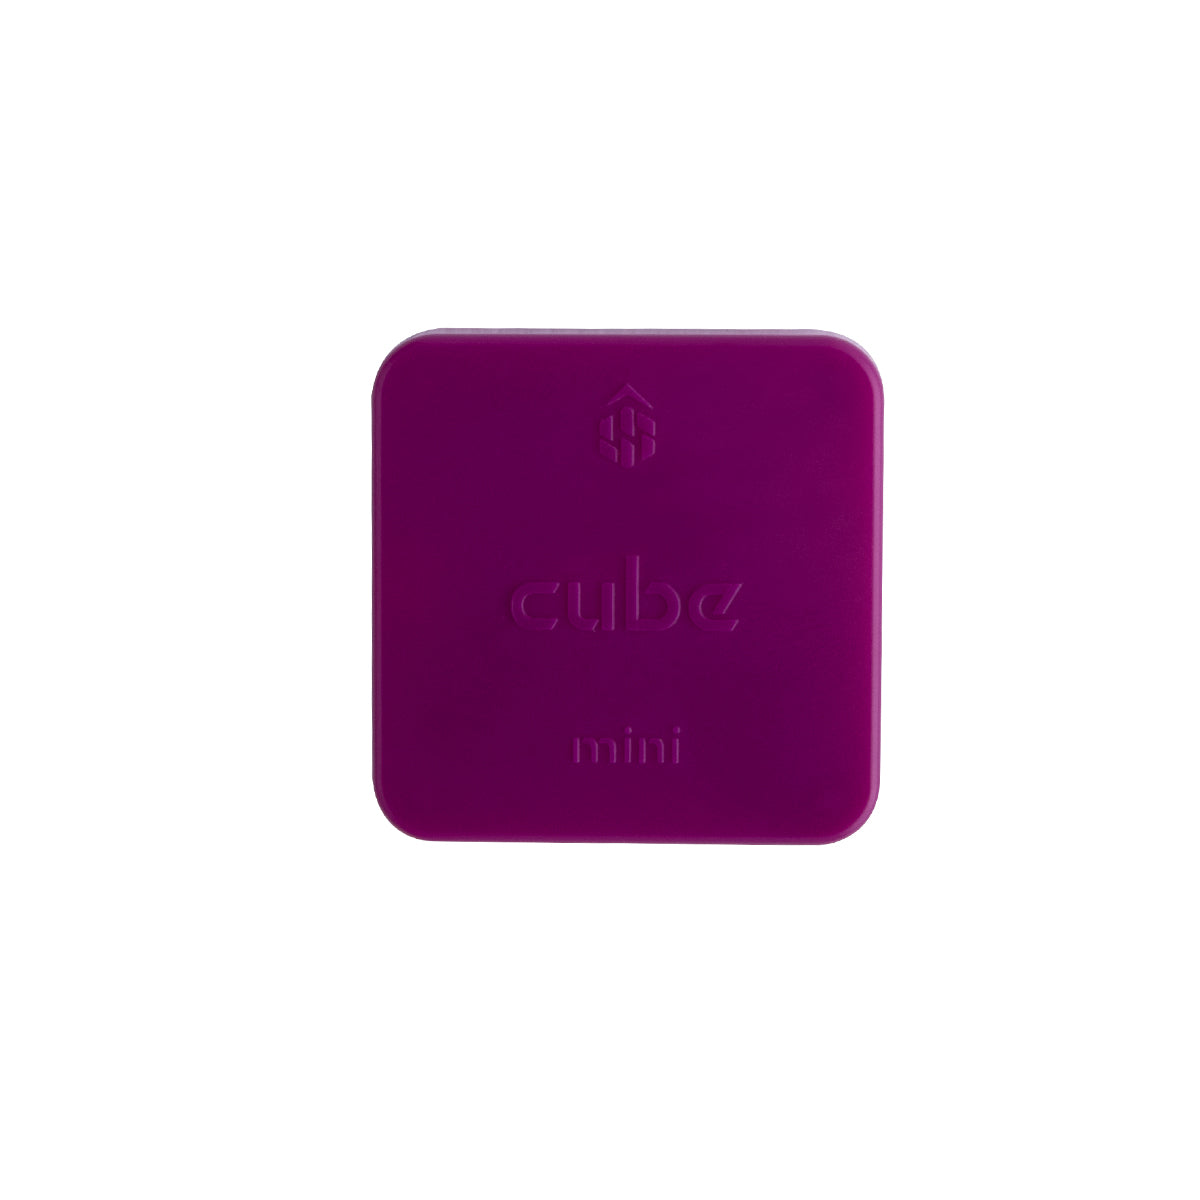 The Cube Purple